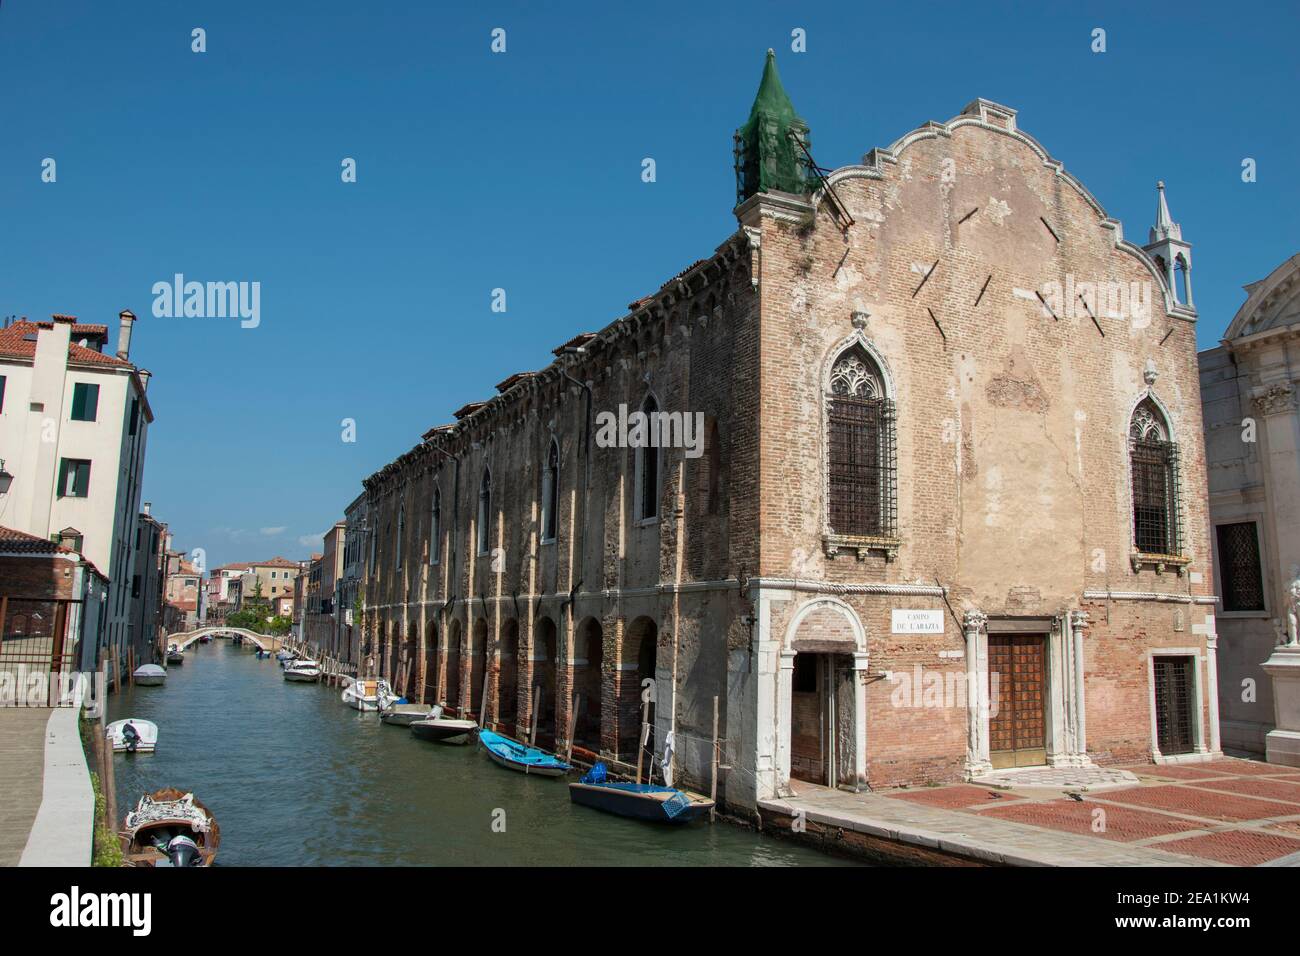 The church of the Abbey of Misericordia, city of Venice, Italy, Europe Stock Photo